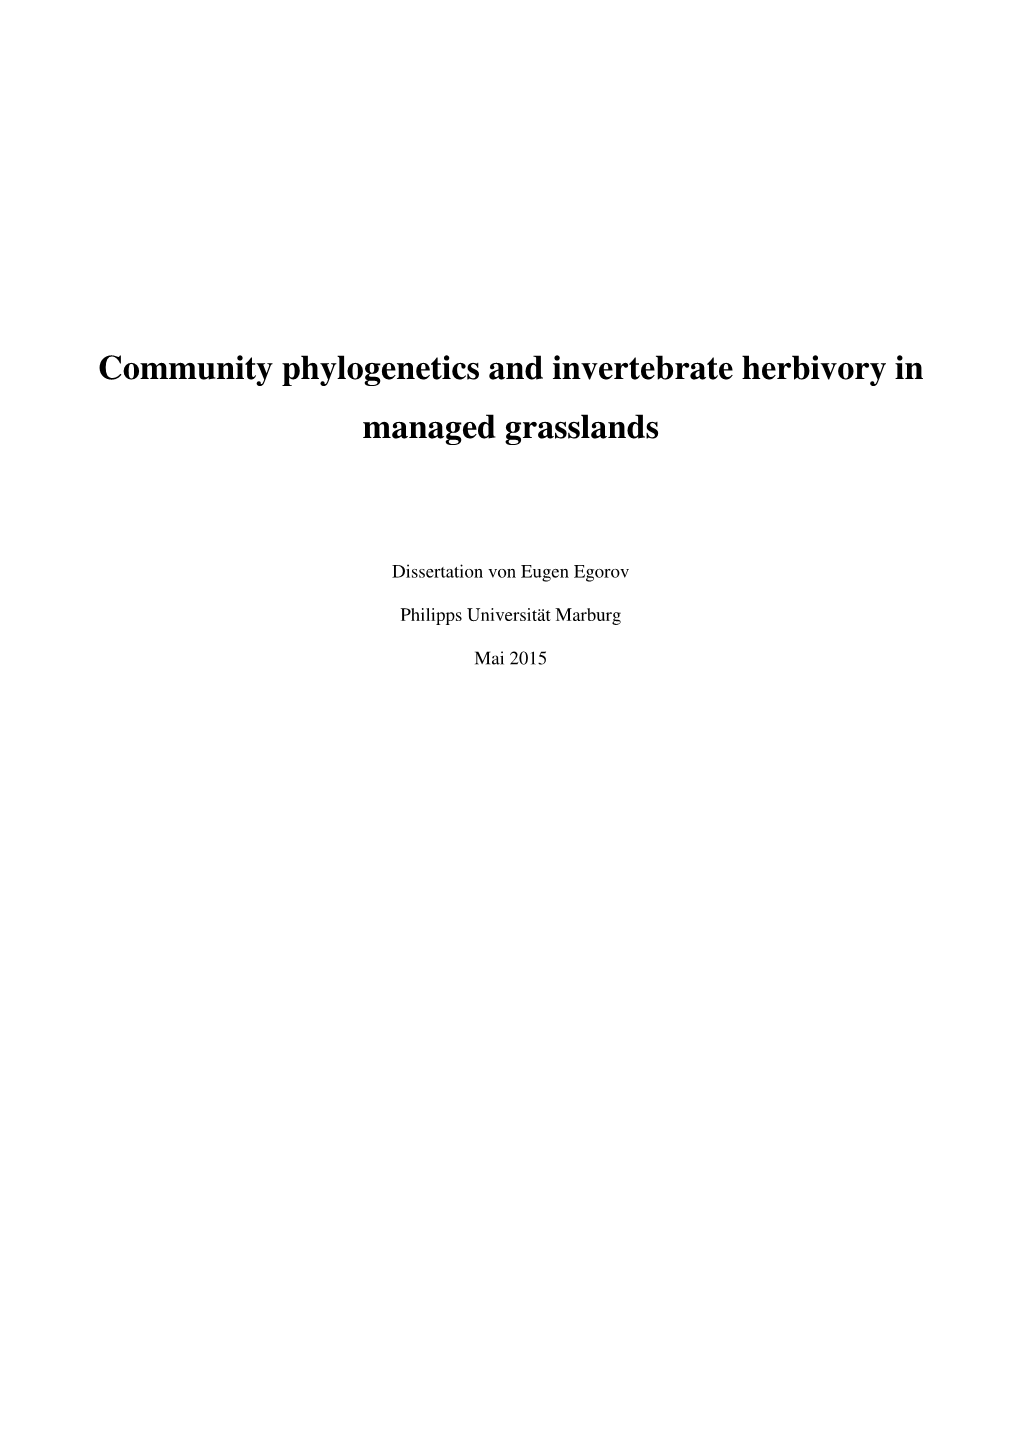 Community Phylogenetics and Invertebrate Herbivory in Managed Grasslands